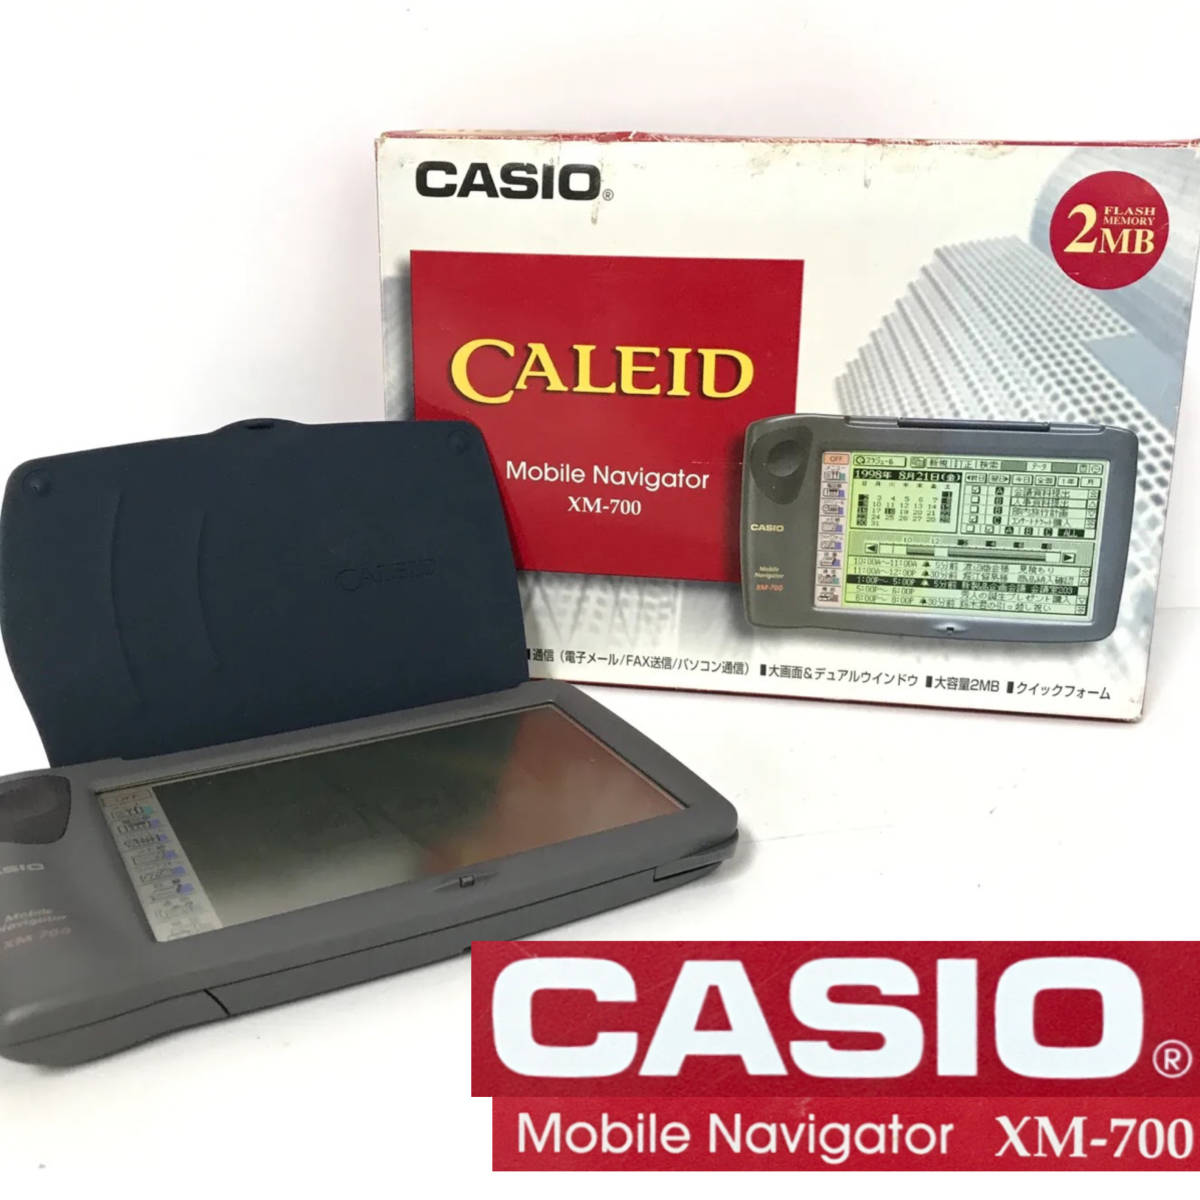 KF1/76　CASIO カシオ CALEID XM-700 Mobile Navigator 電子手帳 モバイルナビゲーター ジャンク品_画像1